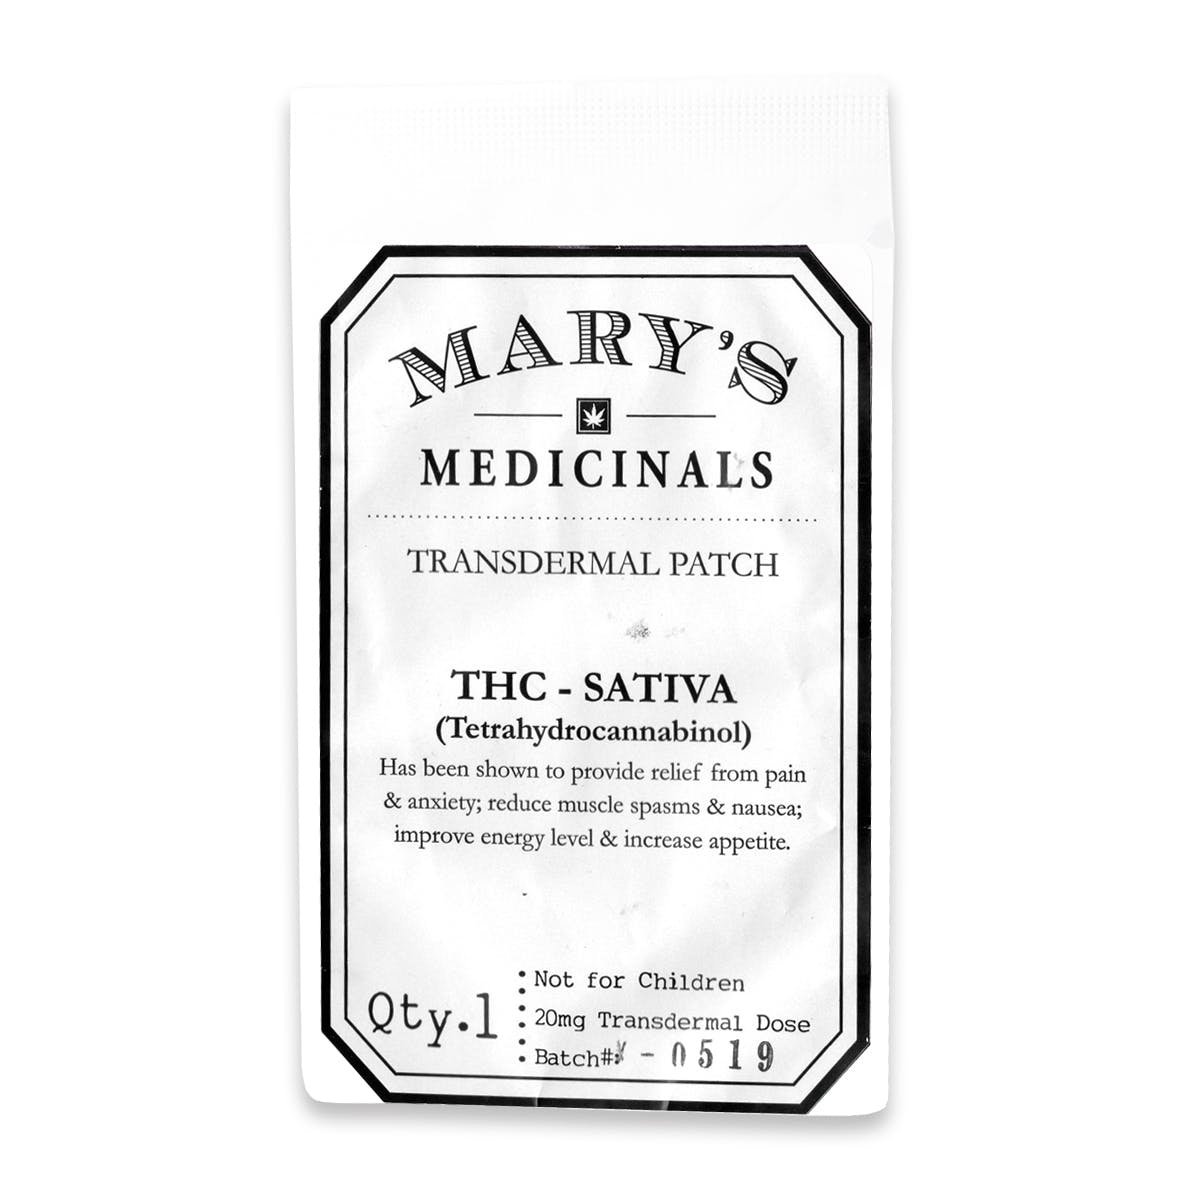 marijuana-dispensaries-igadi-ltd-lafayette-in-lafyette-thc-sativa-transdermal-patch-2c-20mg-med